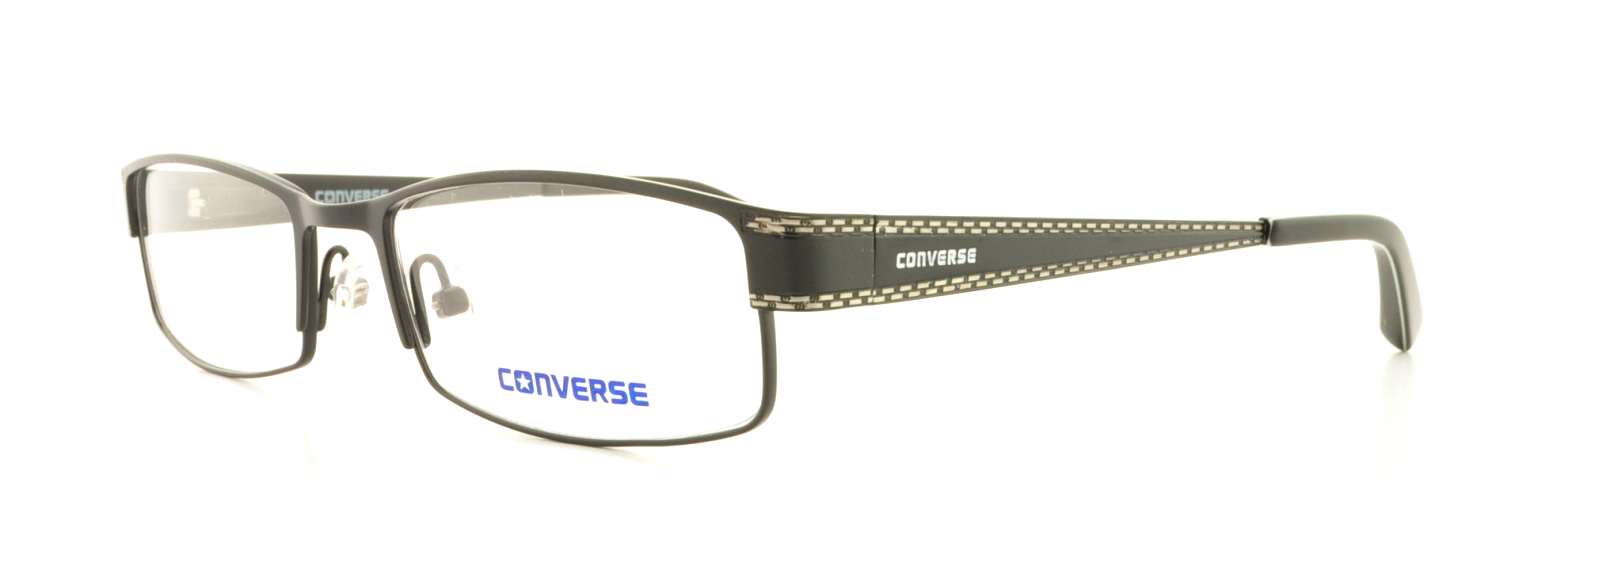 Picture of Converse Eyeglasses RANDOM